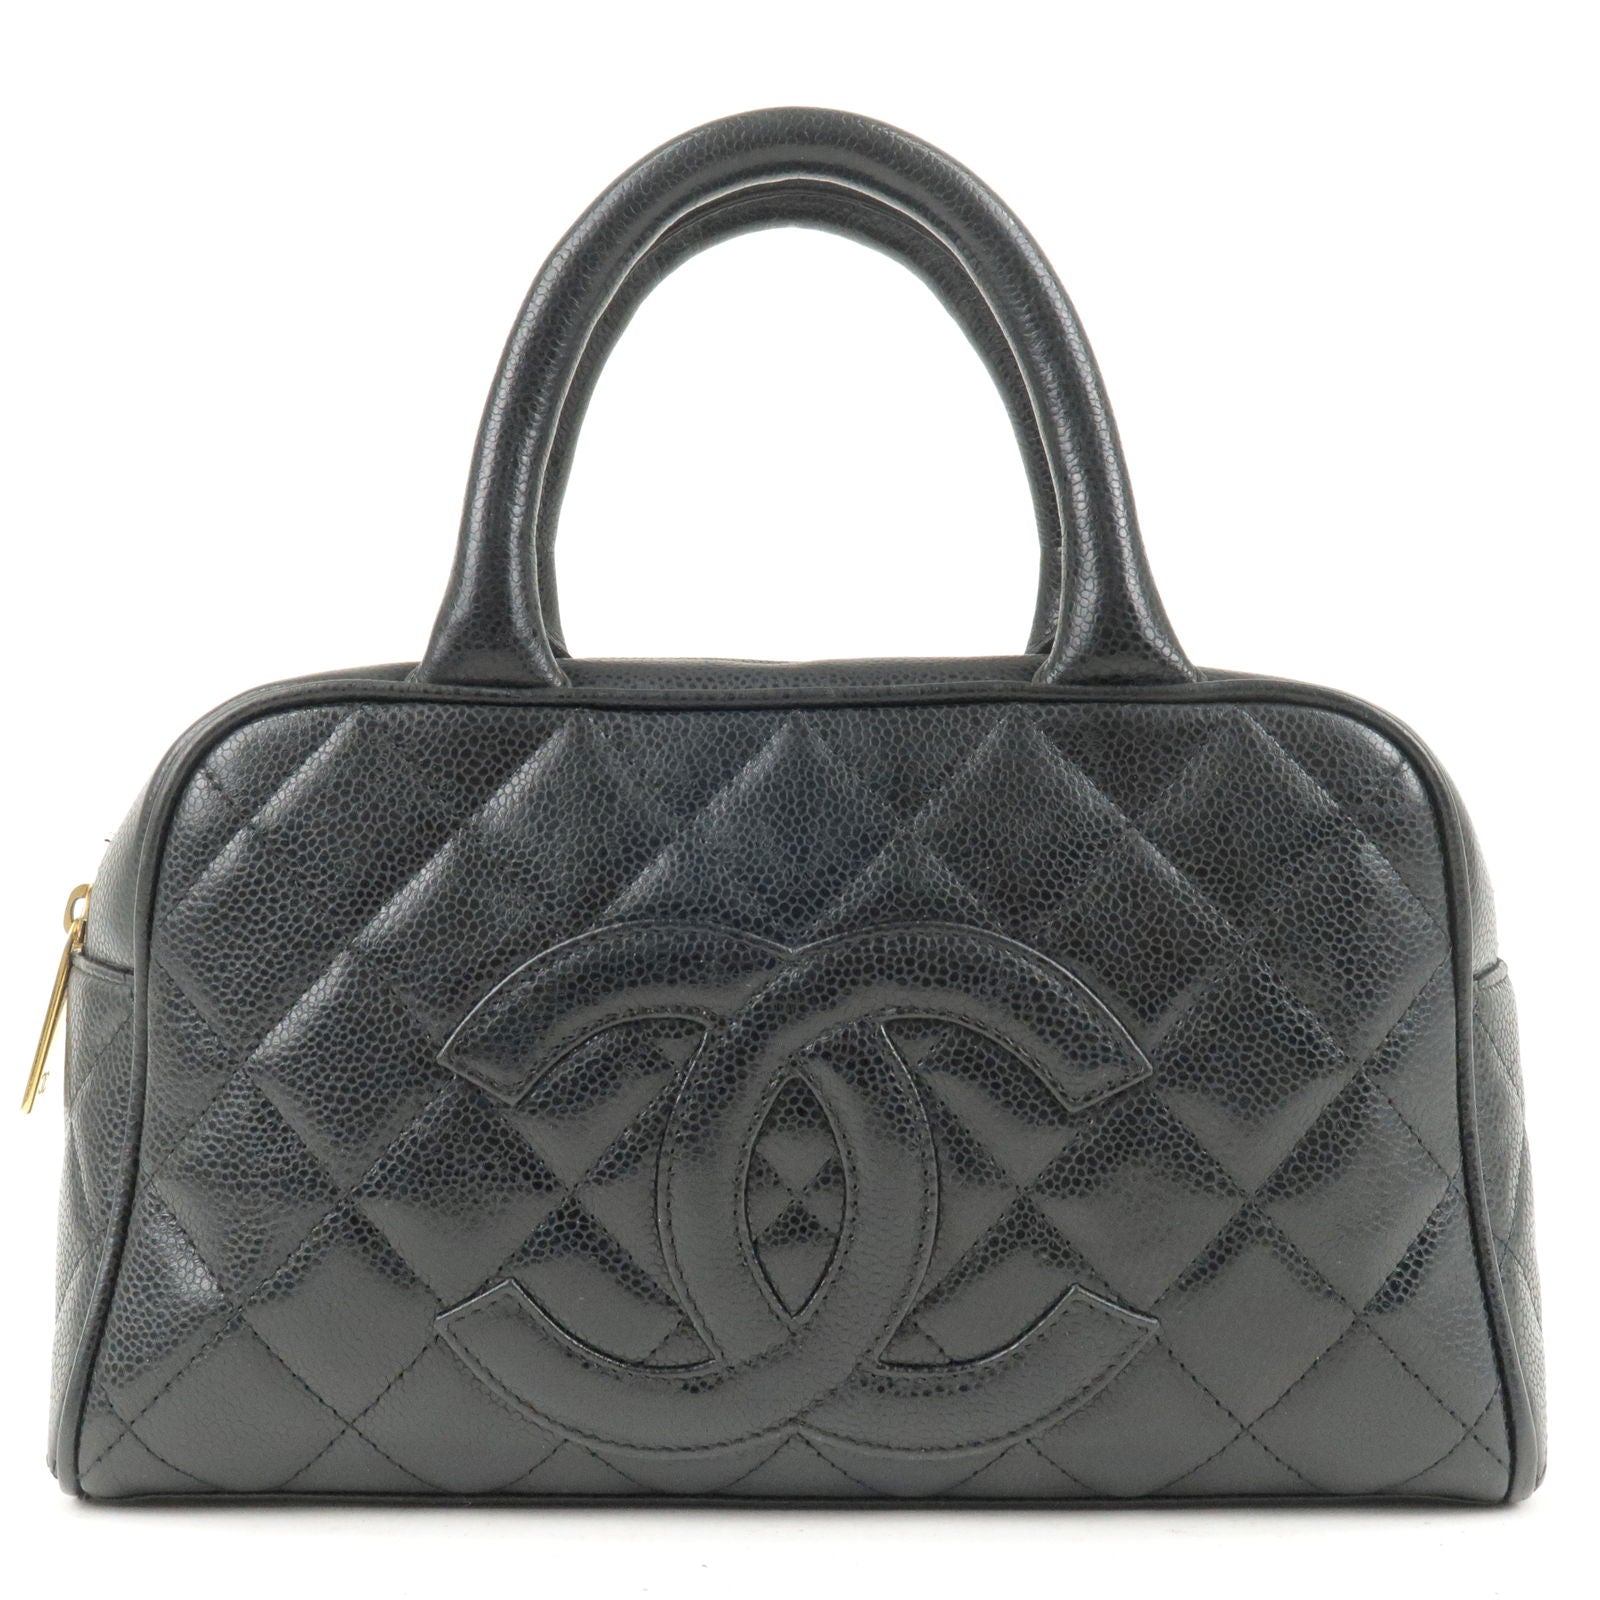 Chanel Vintage Chanel Boston Speedy Black Caviar Leather Handbag +